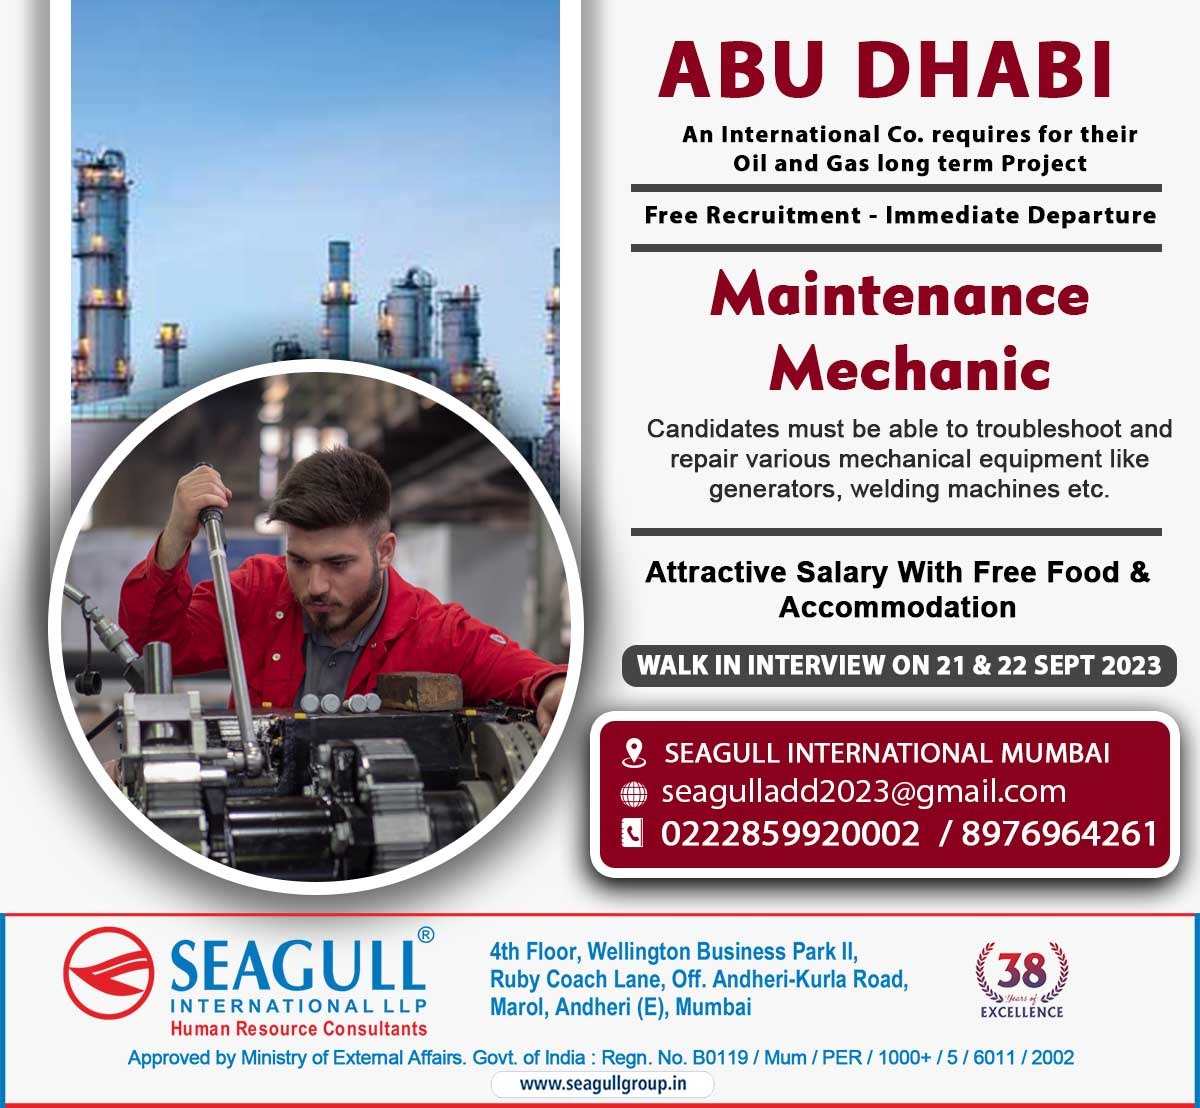 🇦🇪Abu Dhabi Jobs 
‼️Free Recruitment 
🛫Immediate Departure 
✔️Long Term Project 
🗓️Walk In Interview On 21st & 22nd September 2023
.

.

.
#abudhabijobs #seagull #mumbaijobs #maintenancemechanic